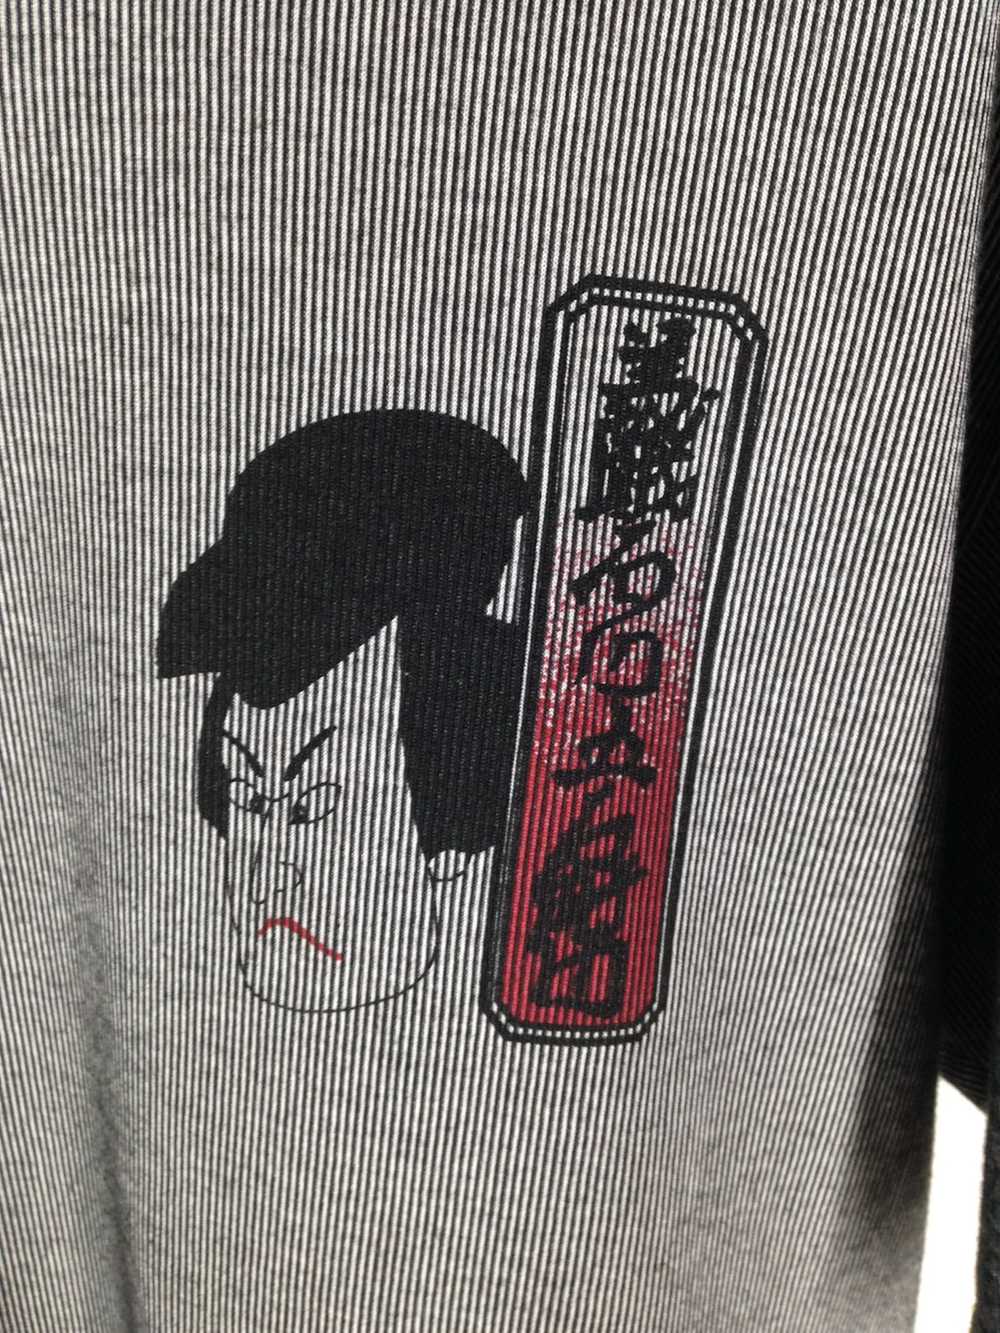 Japanese Brand Japanese Brand tshirts - image 8